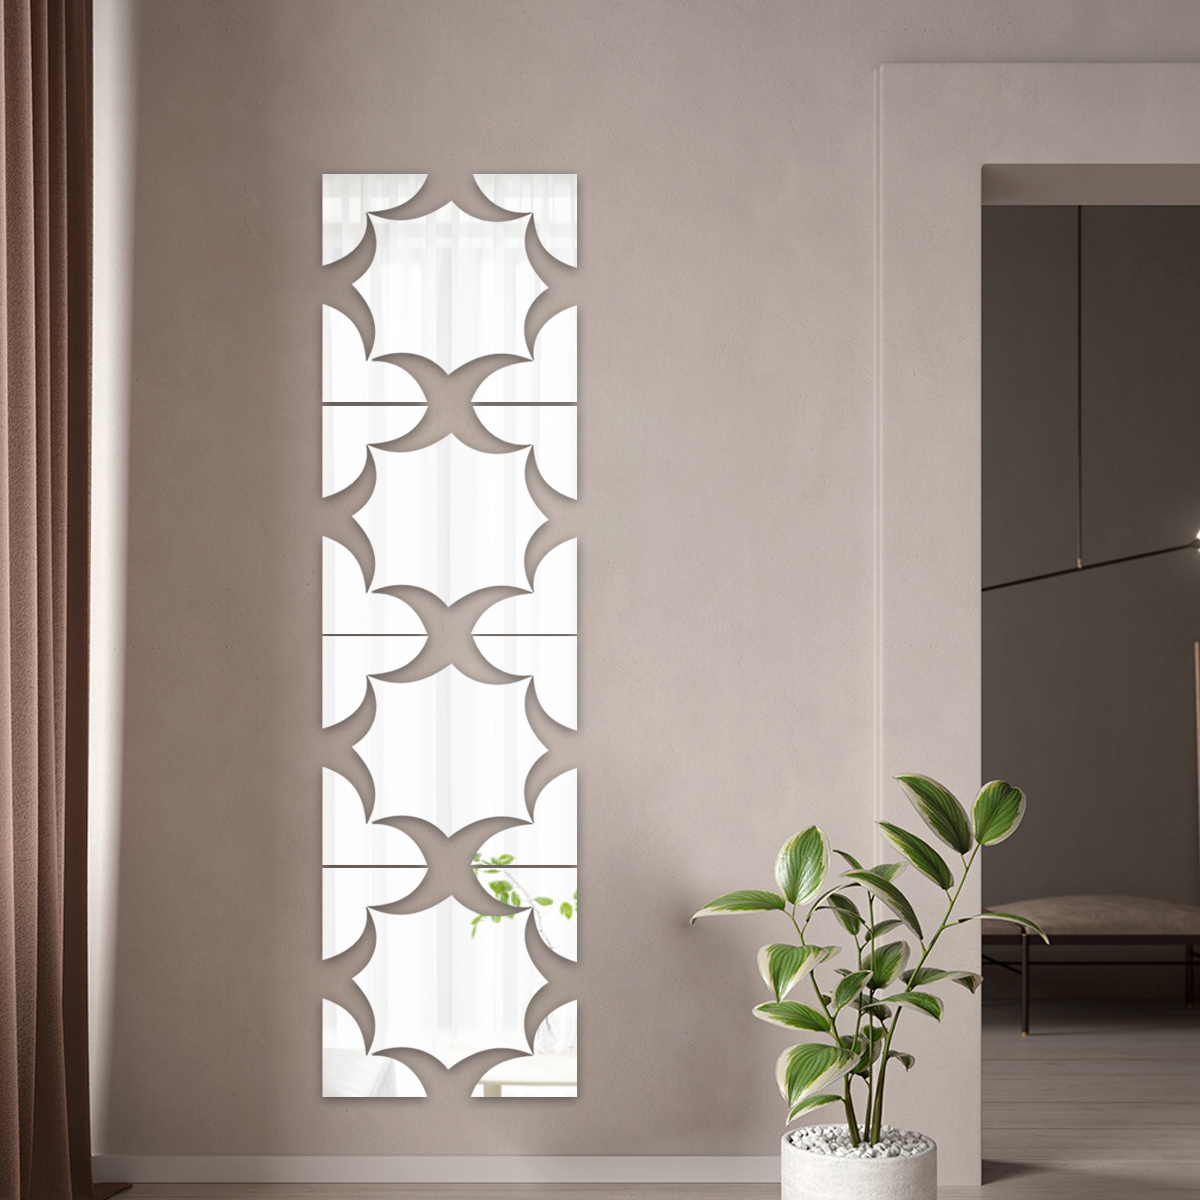 3D-Acrylic-Wall-Sticker-Pattern-Combination-Mirror-Wall-Sticker-Home-Decoration-4040cm-1822610-2